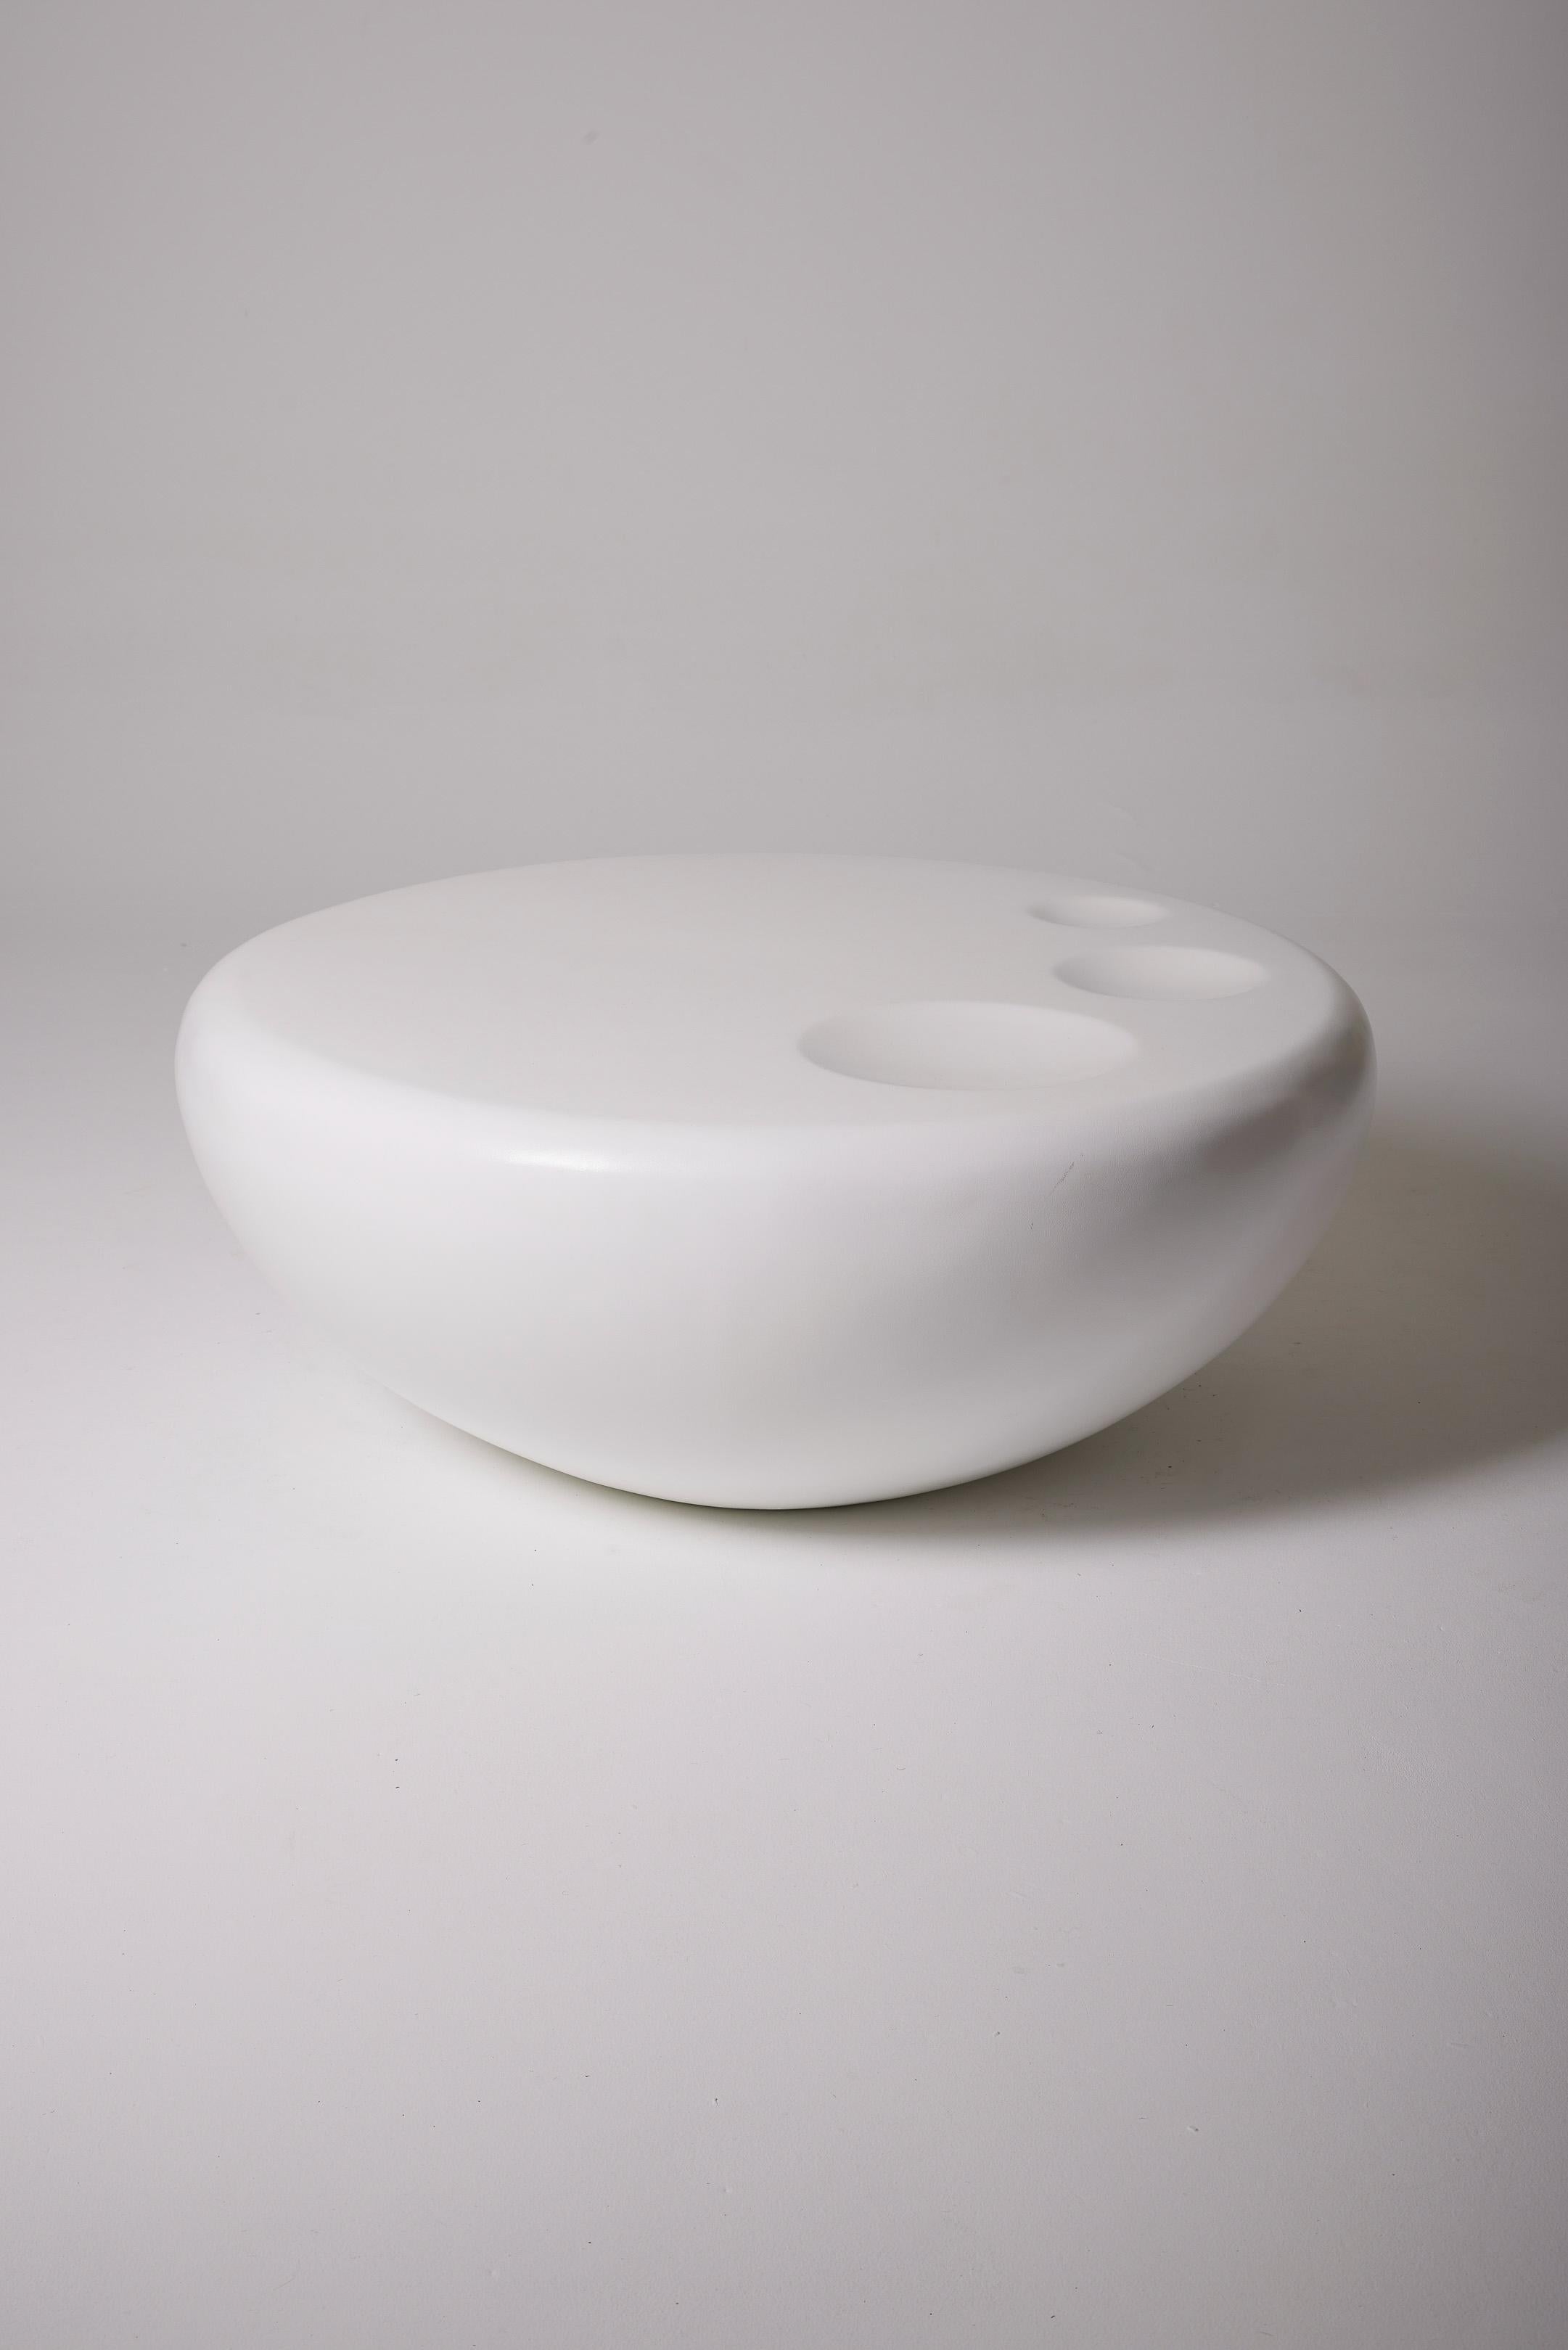  White round fiberglass coffee table. Very good condition.
LP3057